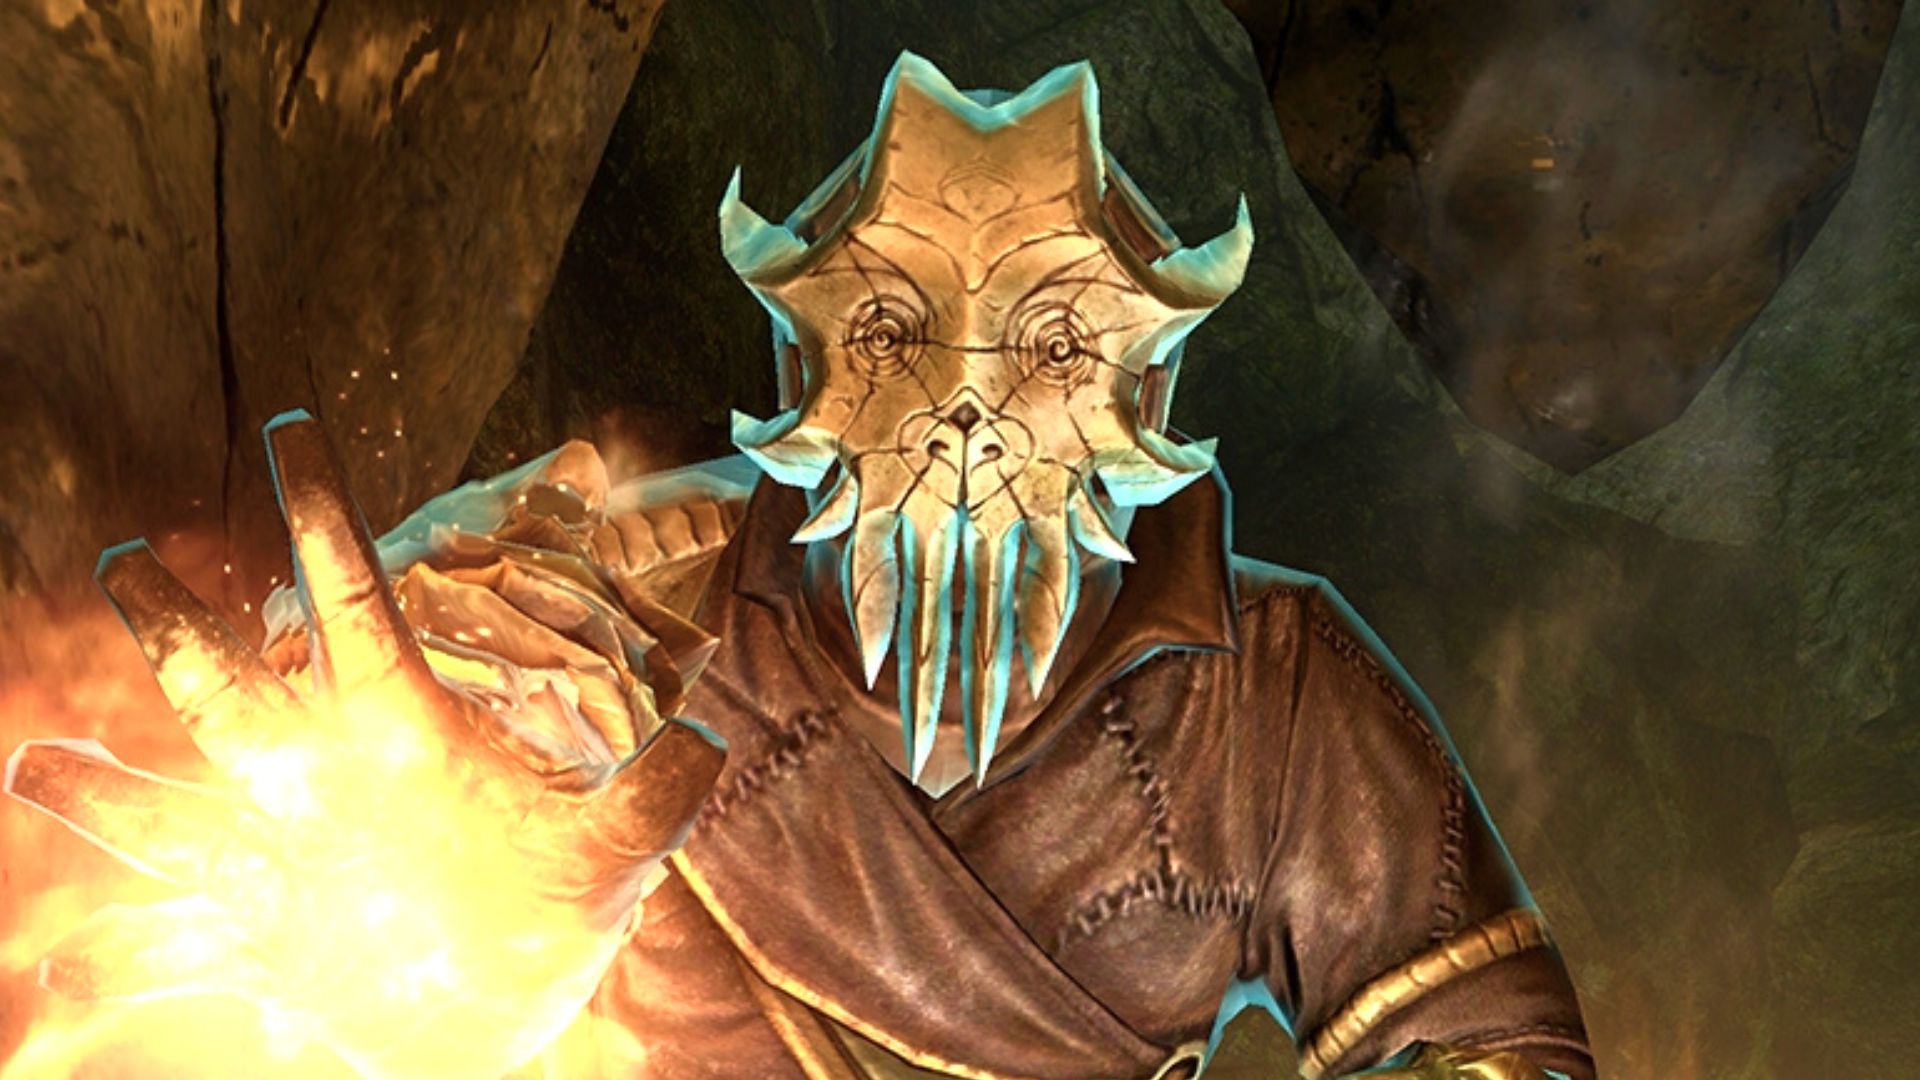 Elder Scrolls 6' Release Rumors: Upcoming Game Needs Character